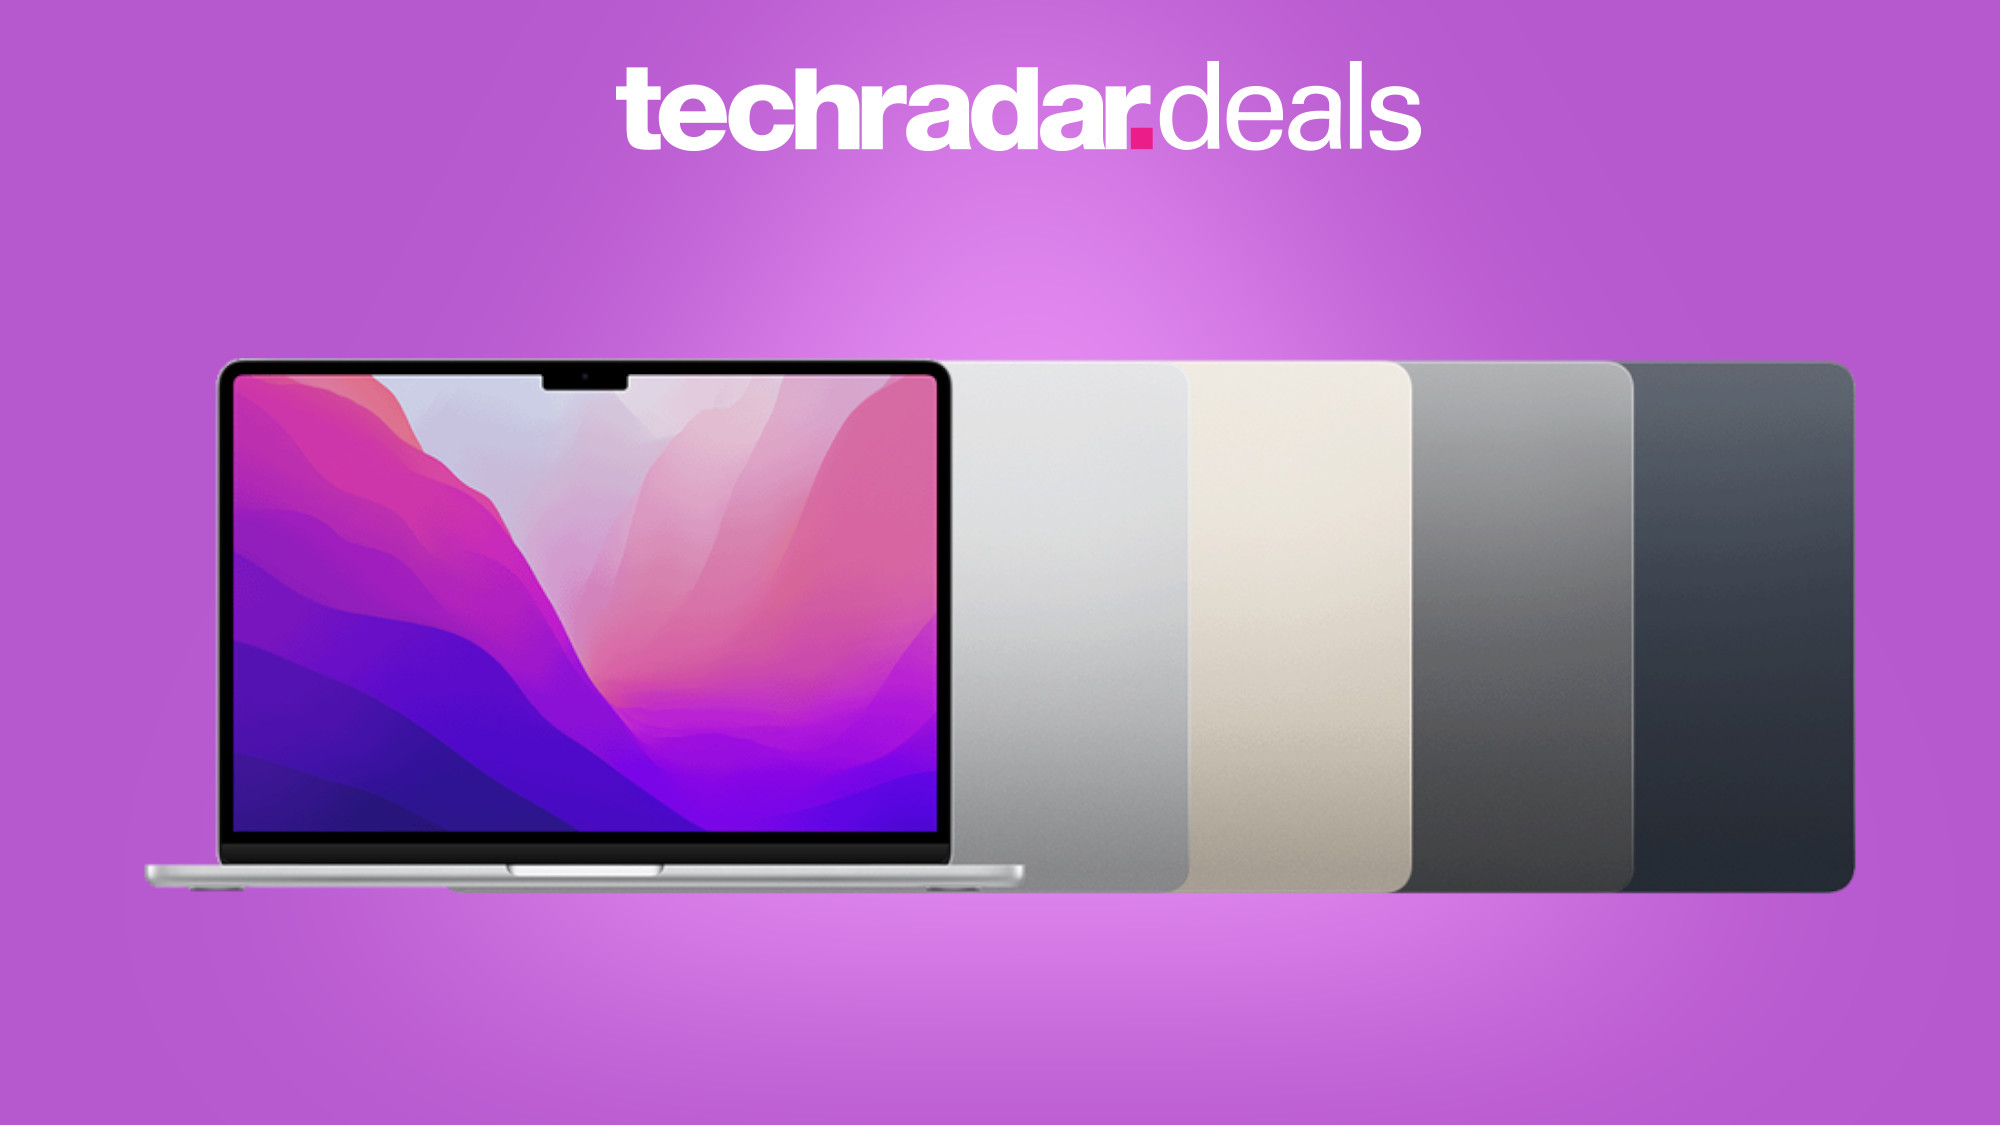 Apple MacBook Air m2 on purple background with TechRadar deals text